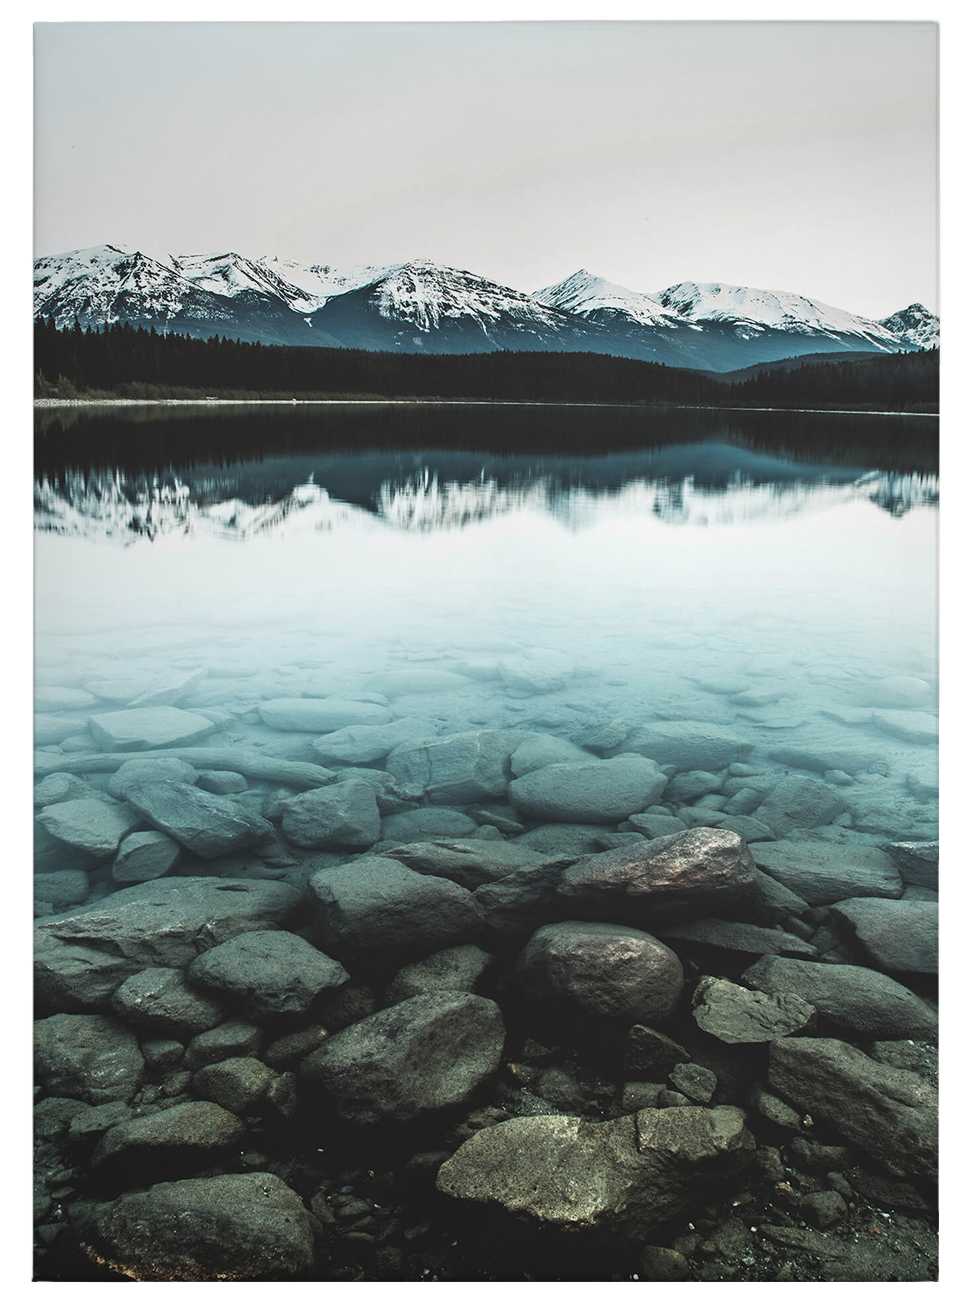             Cuadro en lienzo Paisaje idílico lago en las montañas - 0,50 m x 0,70 m
        